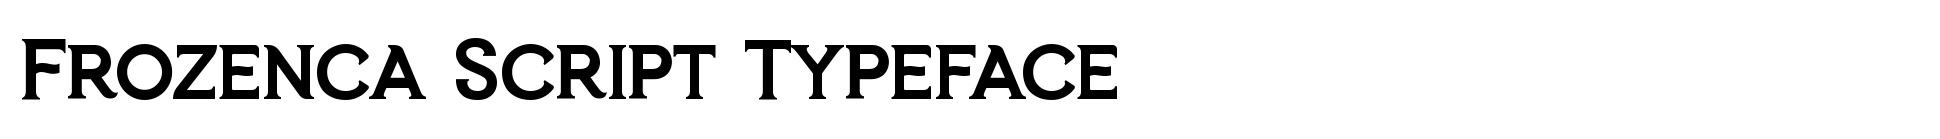 Frozenca Script Typeface